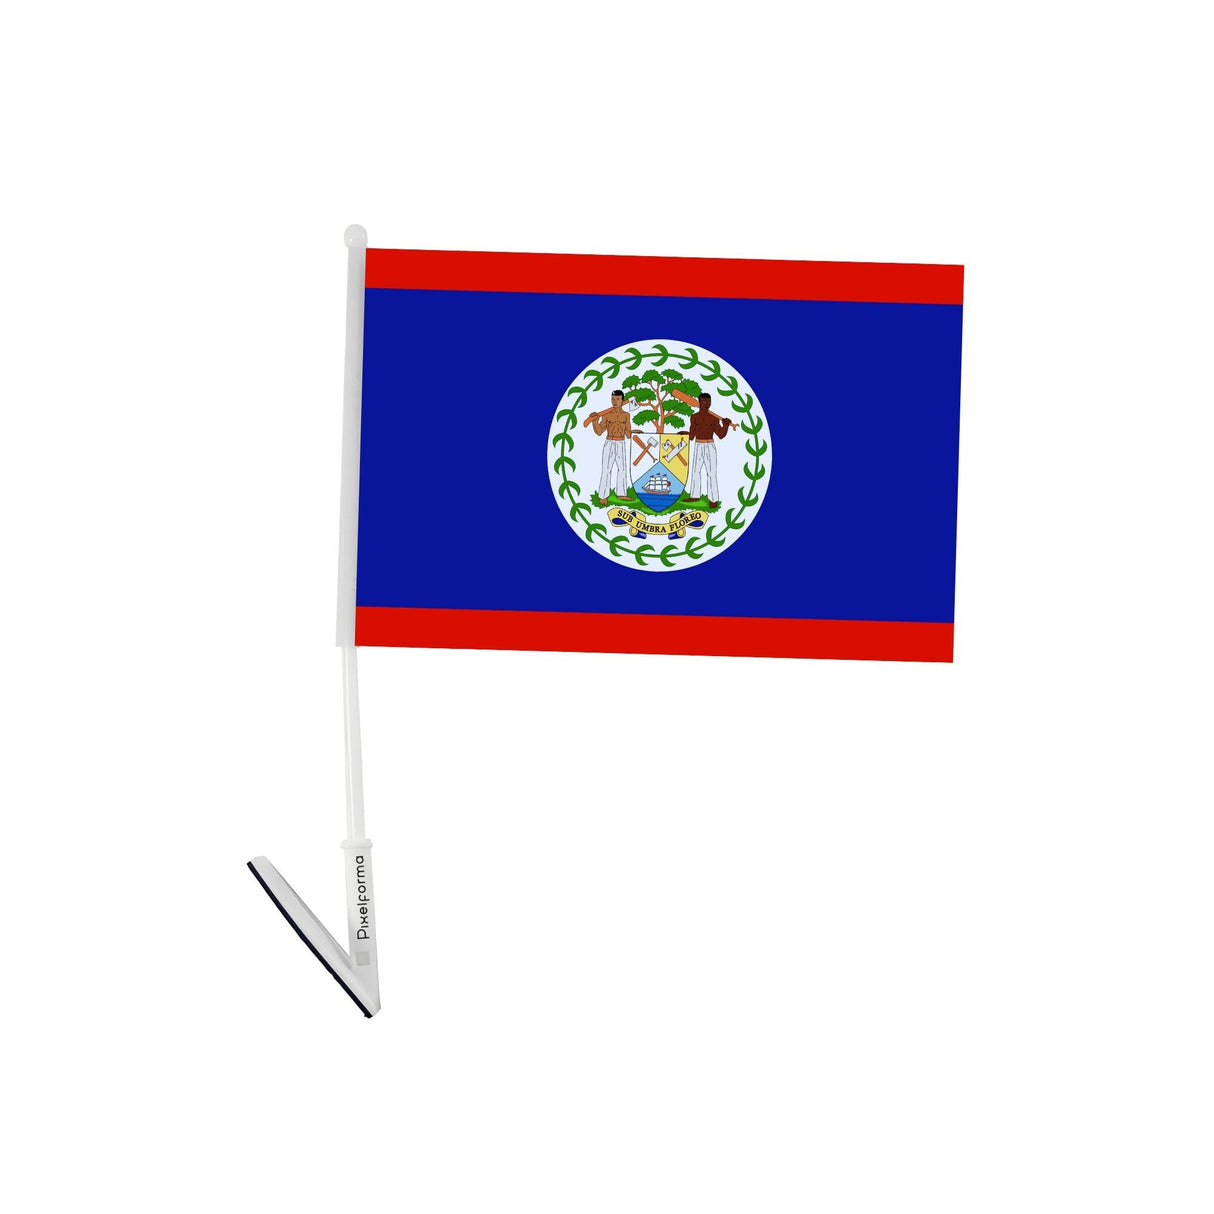 Belize Adhesive Flag - Pixelforma